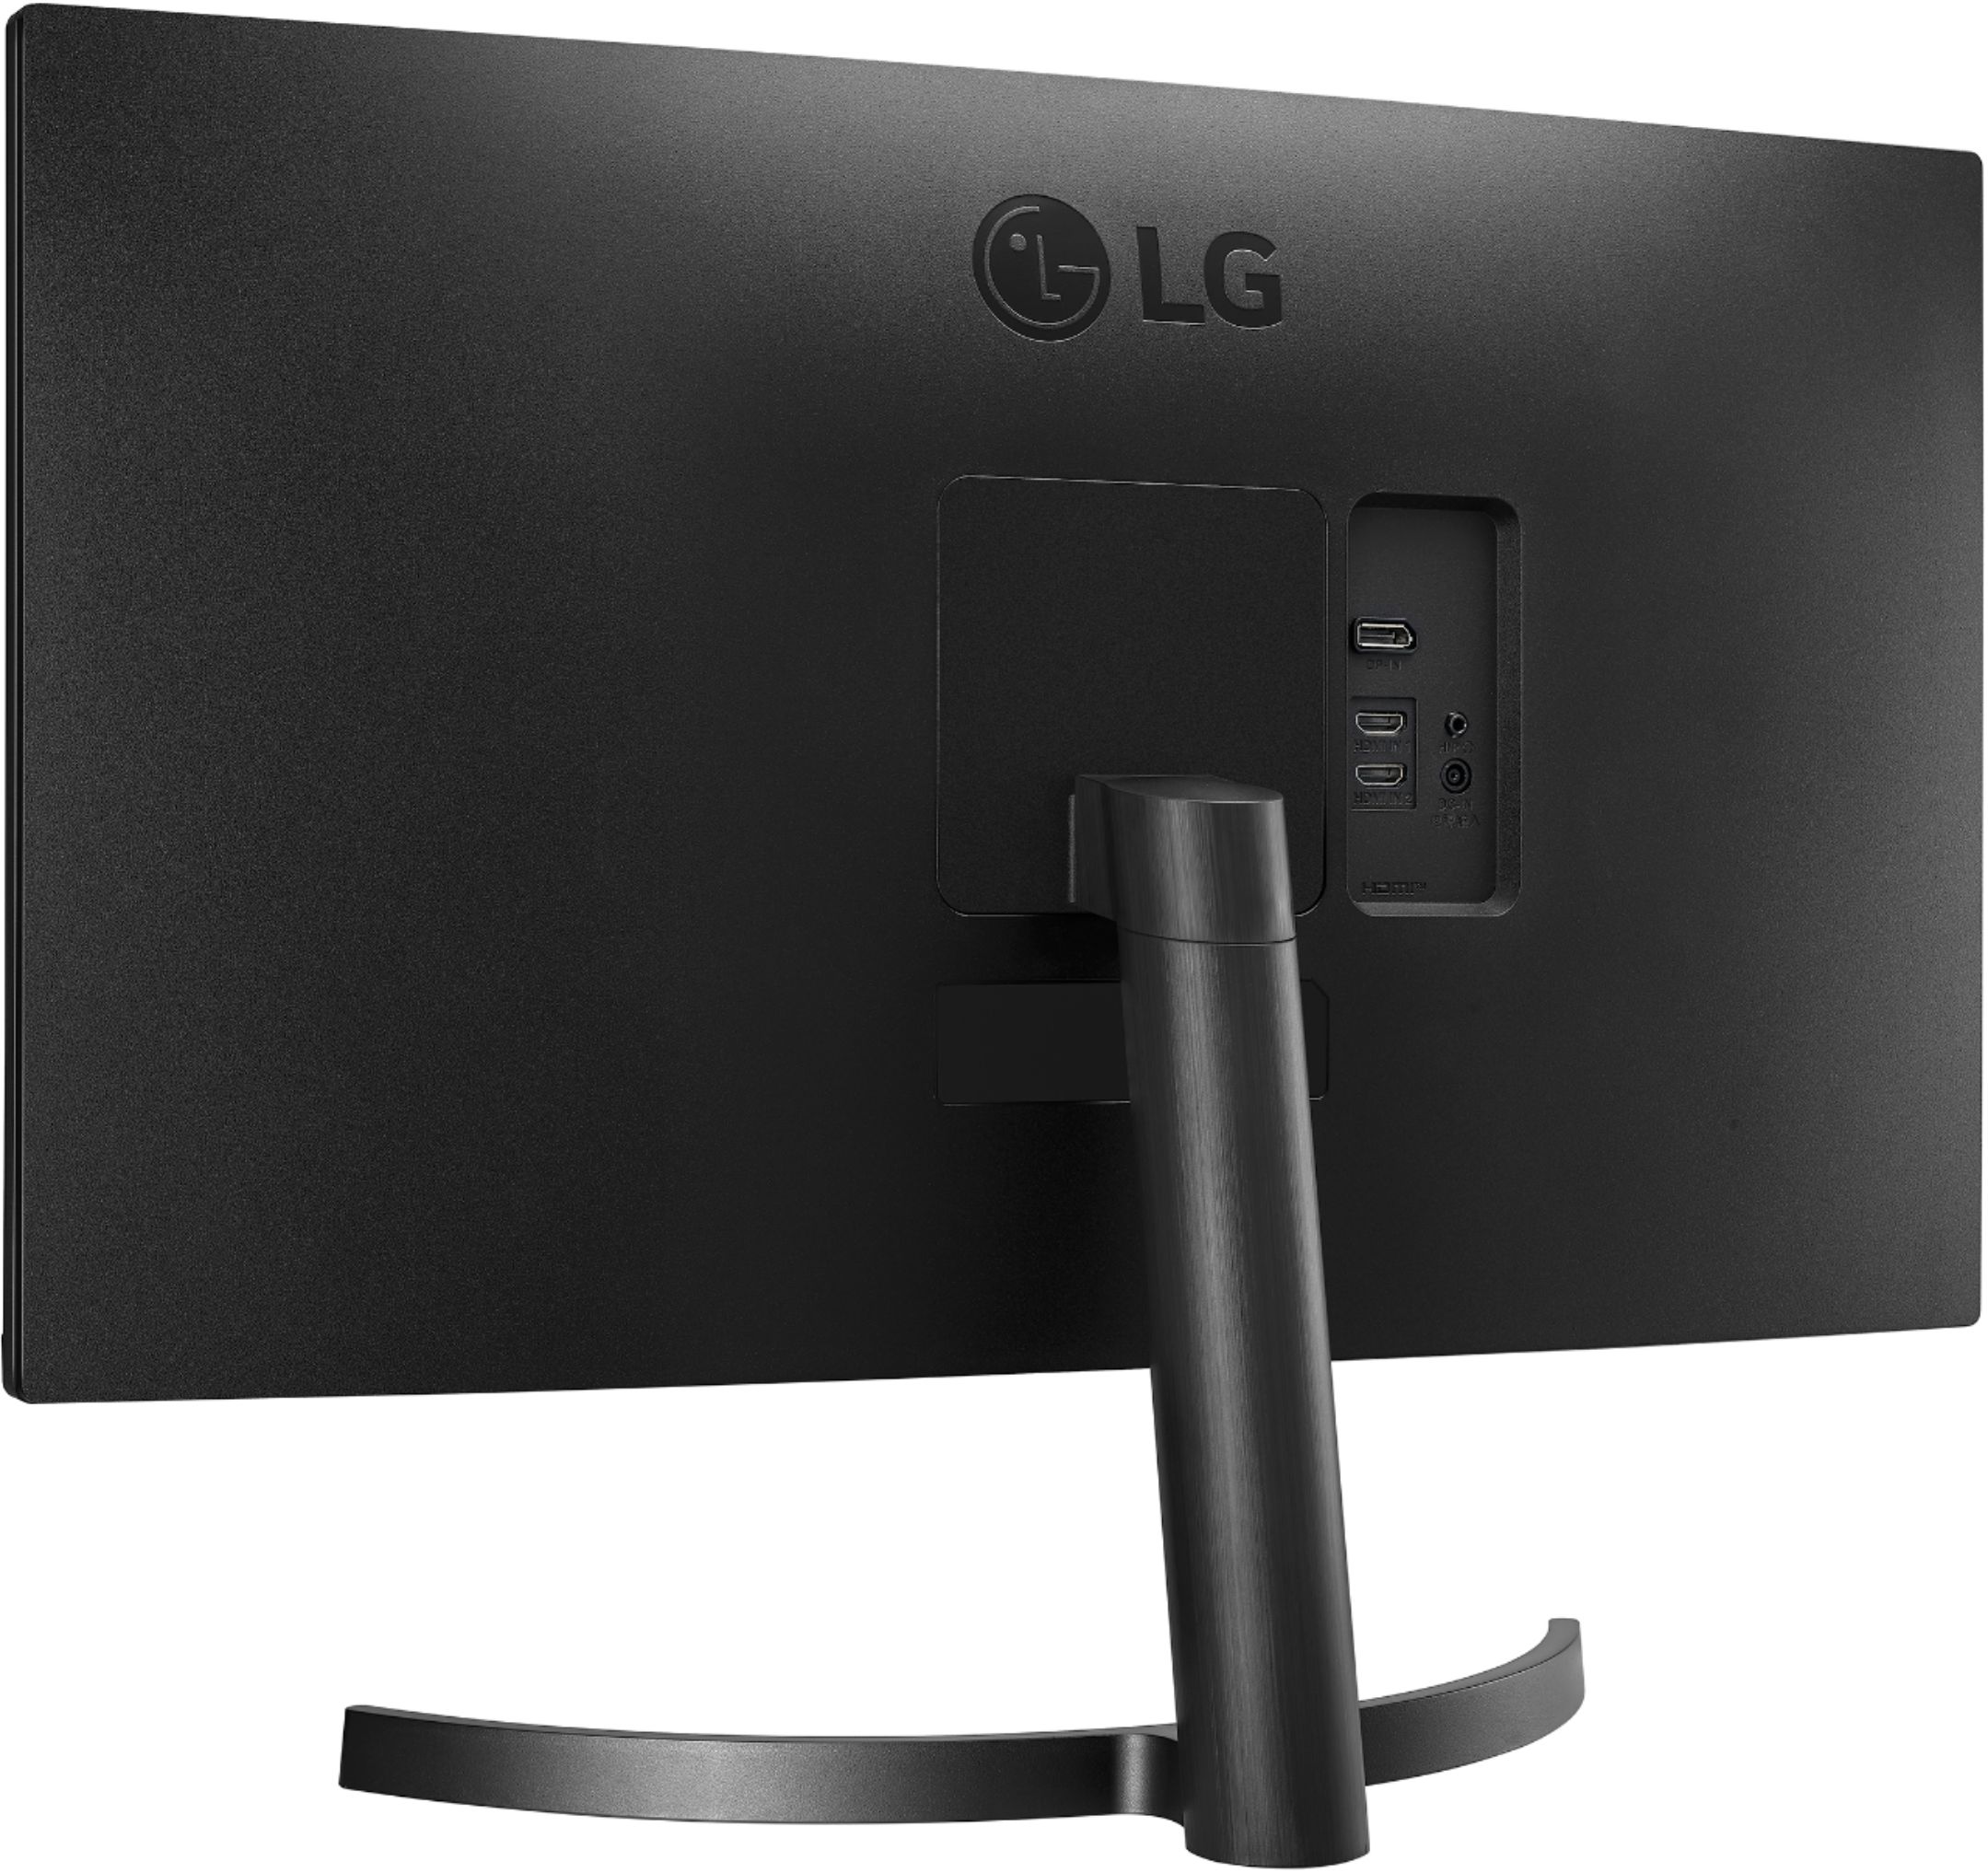 LG 27” IPS LED FHD 75Hz AMD FreeSync Monitor (HDMI, DisplayPort) Black  27MQ44B-B - Best Buy